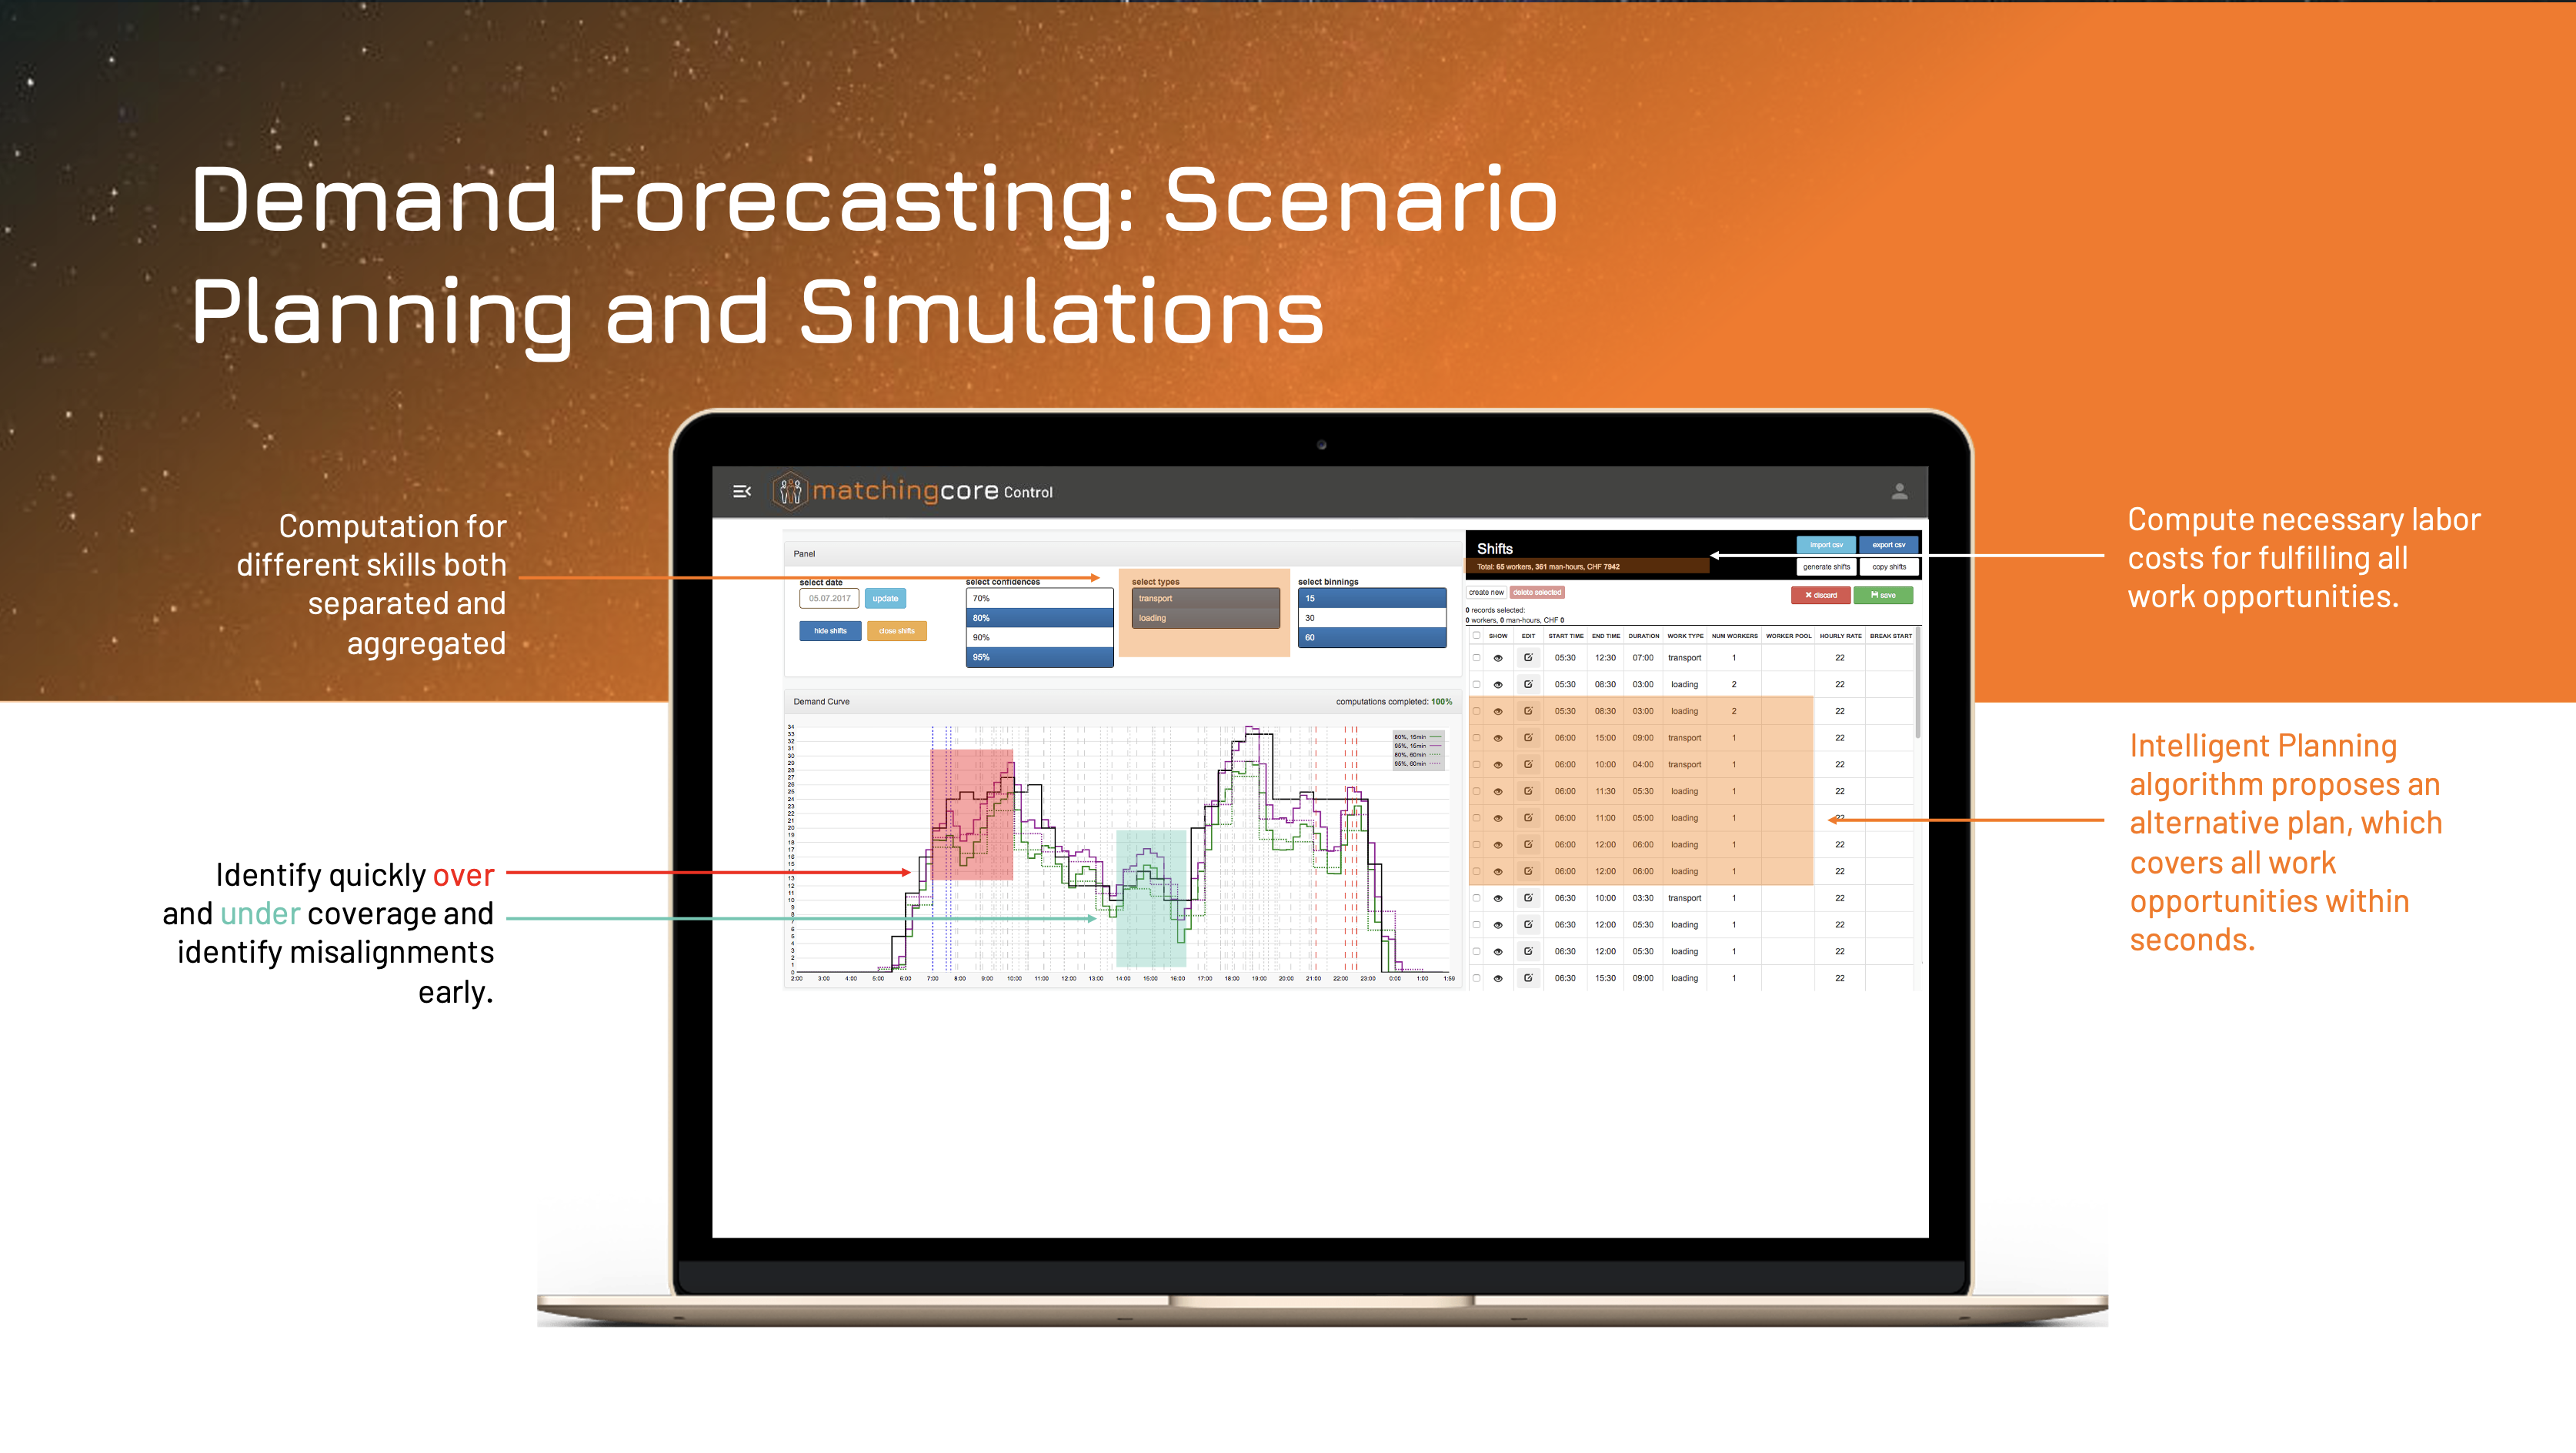 Simulation: Demand Forecasting. Scenario Planning and Simulations